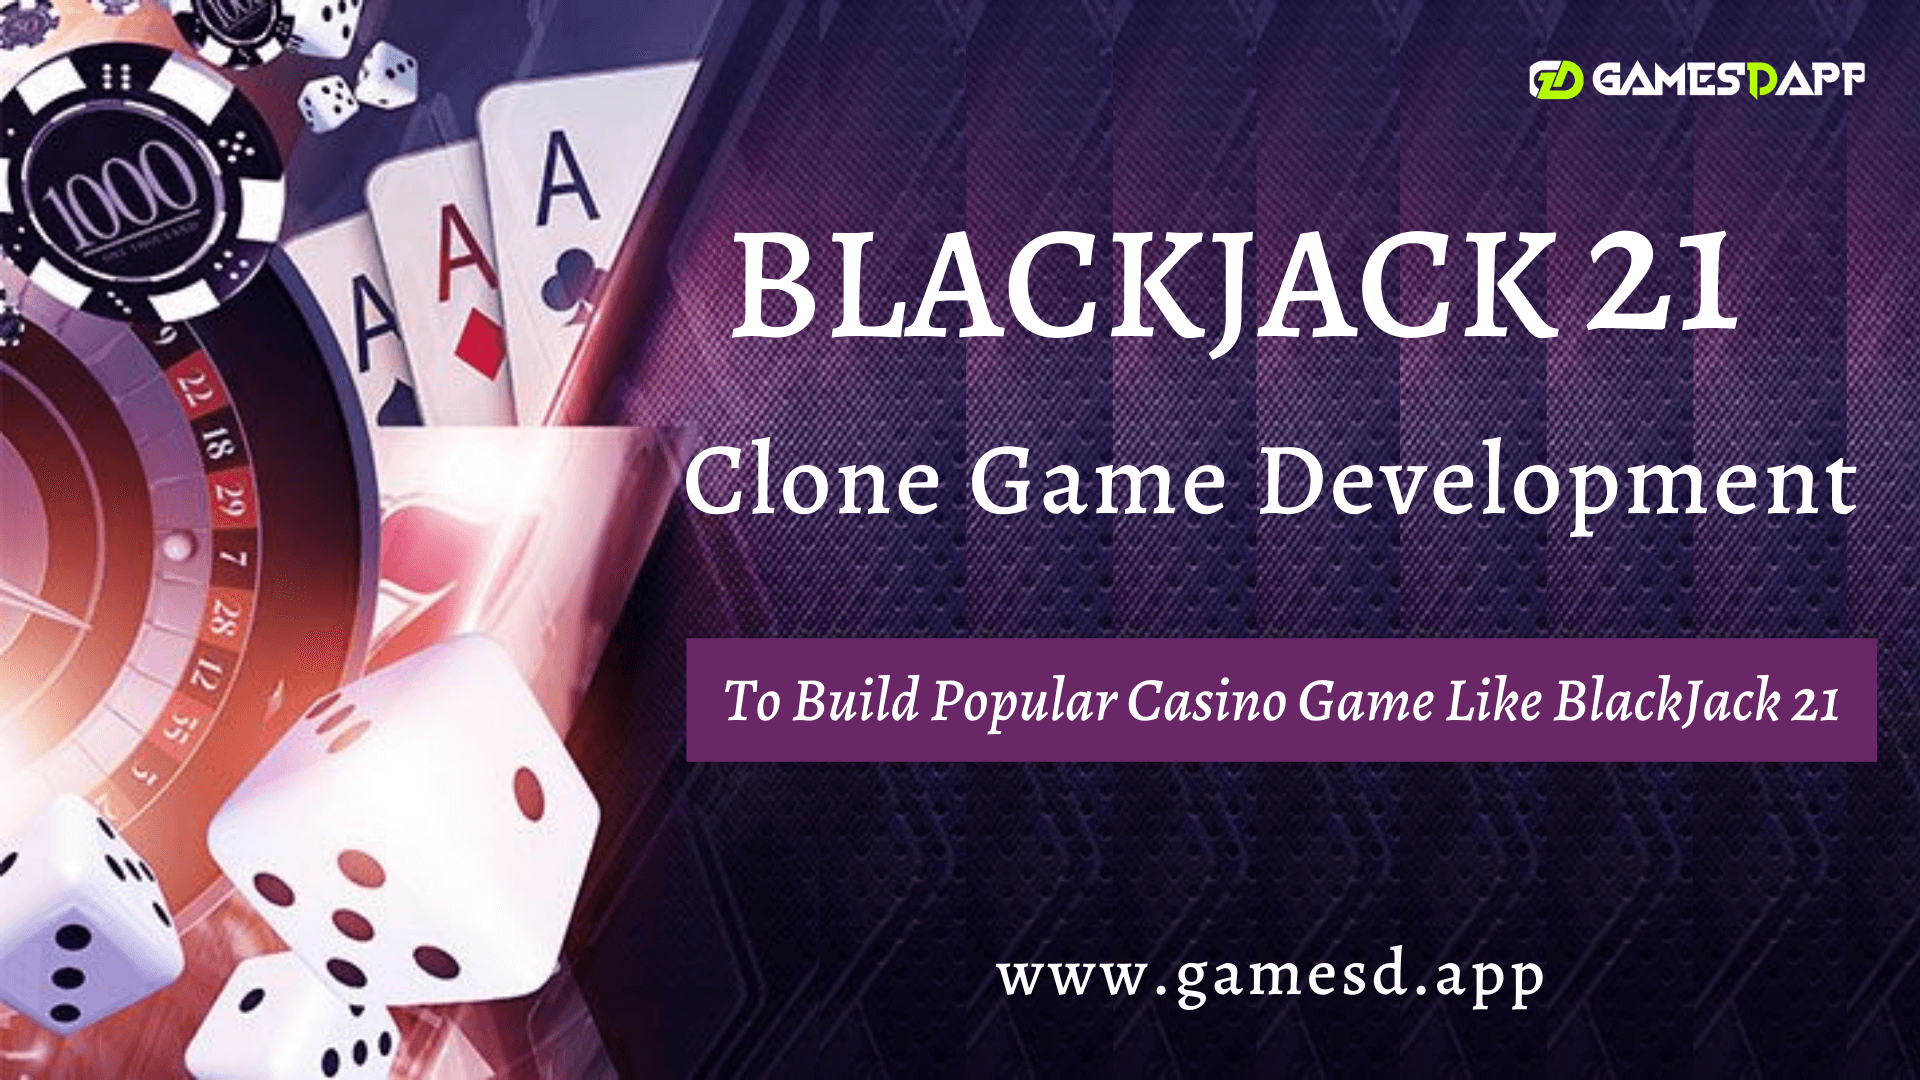 How to Build Popular Casino Game Like BlackJack 21? - BLACKJACK 21 Game Clone Development